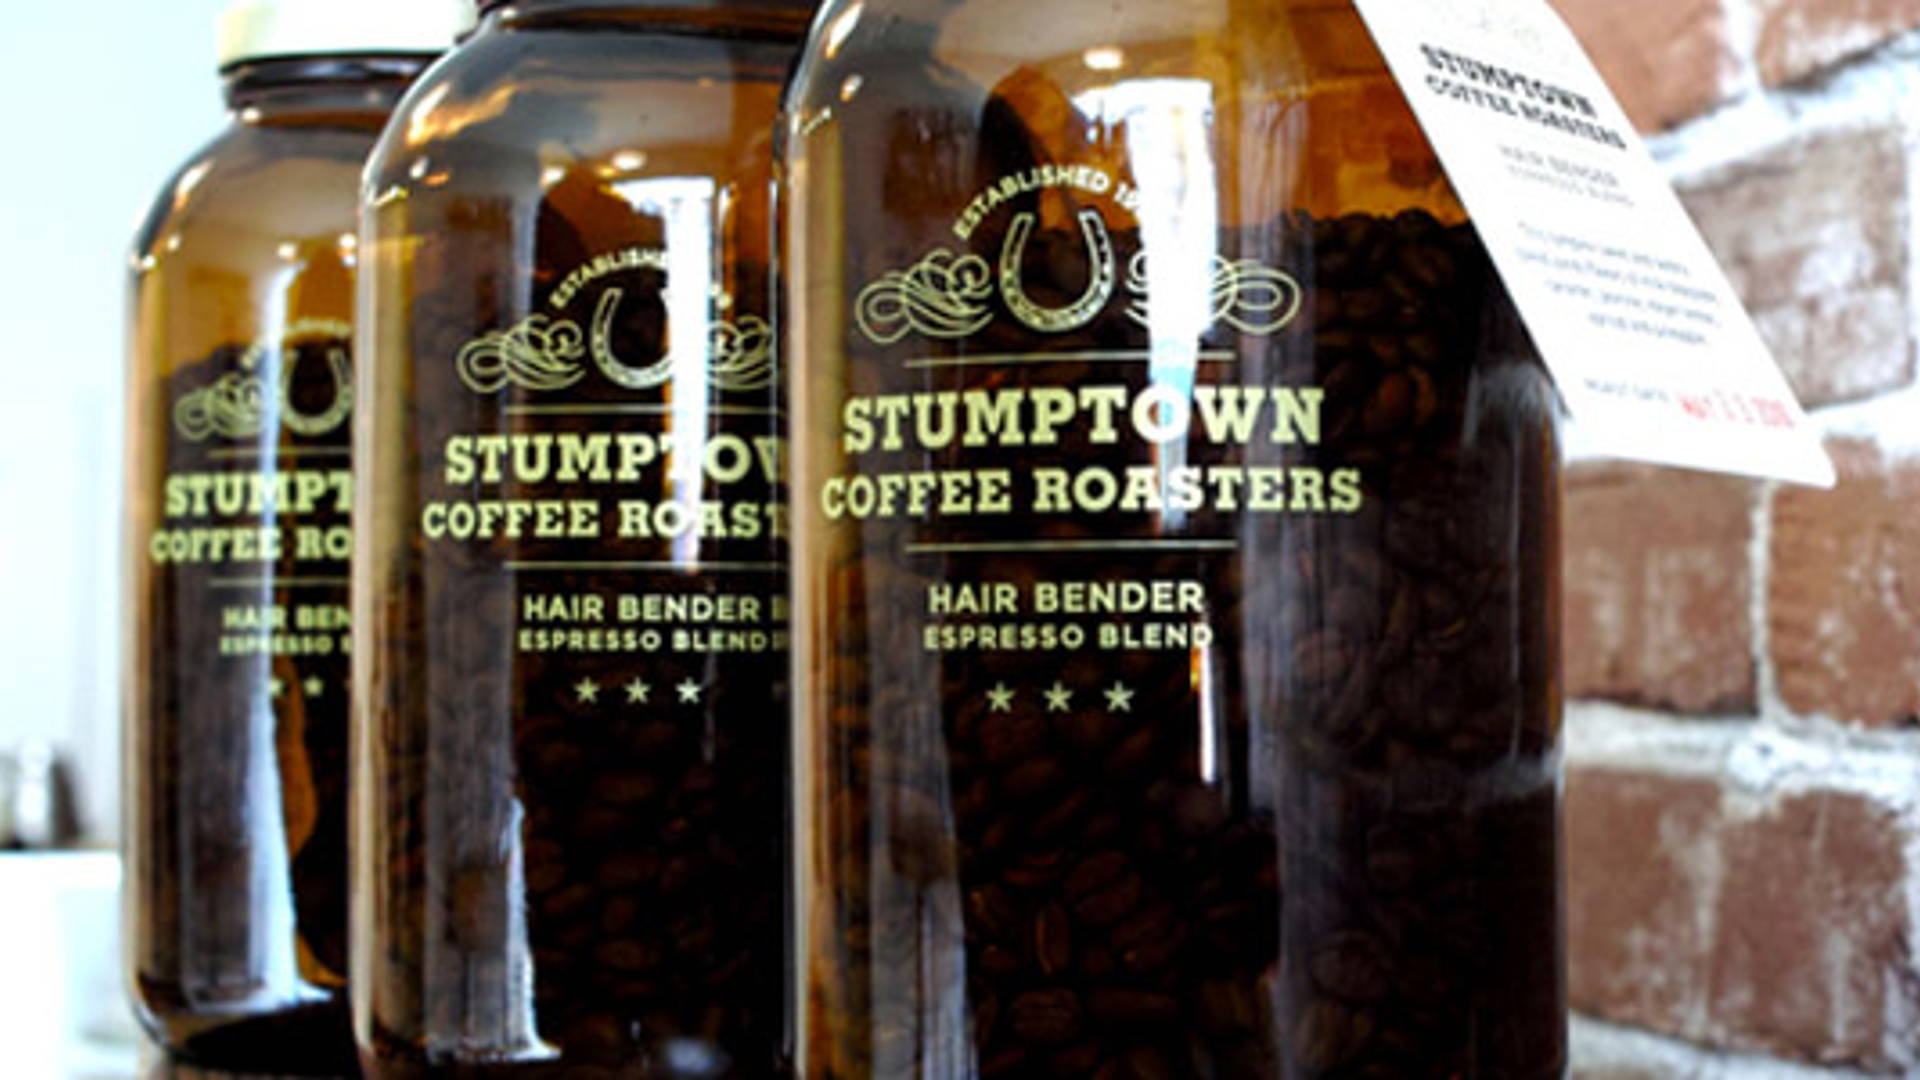 Featured image for Stumptown Coffee Roasters Hair Bender Espresso